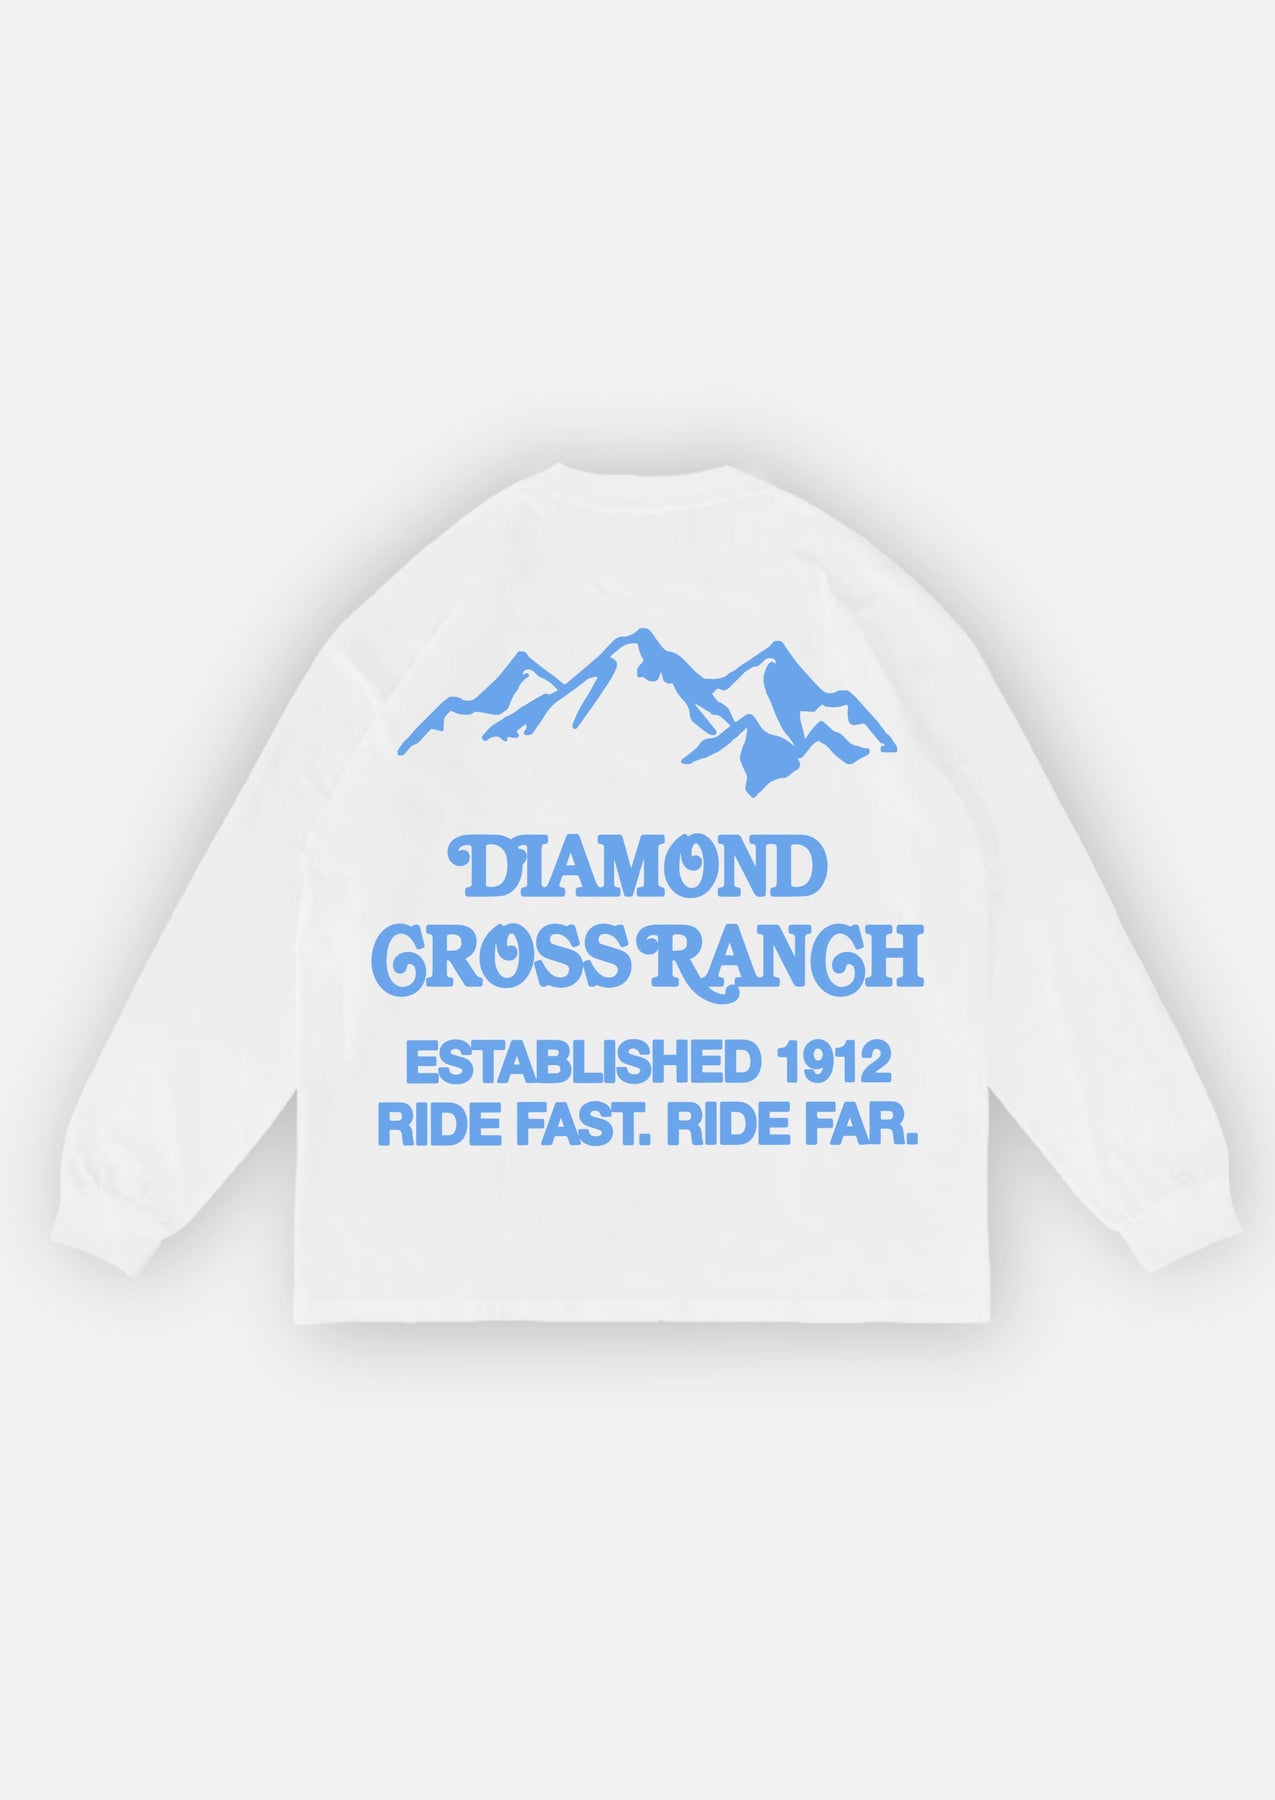 Ranch – Hole Diamond Cross Jackson | Rowdy t-shirts